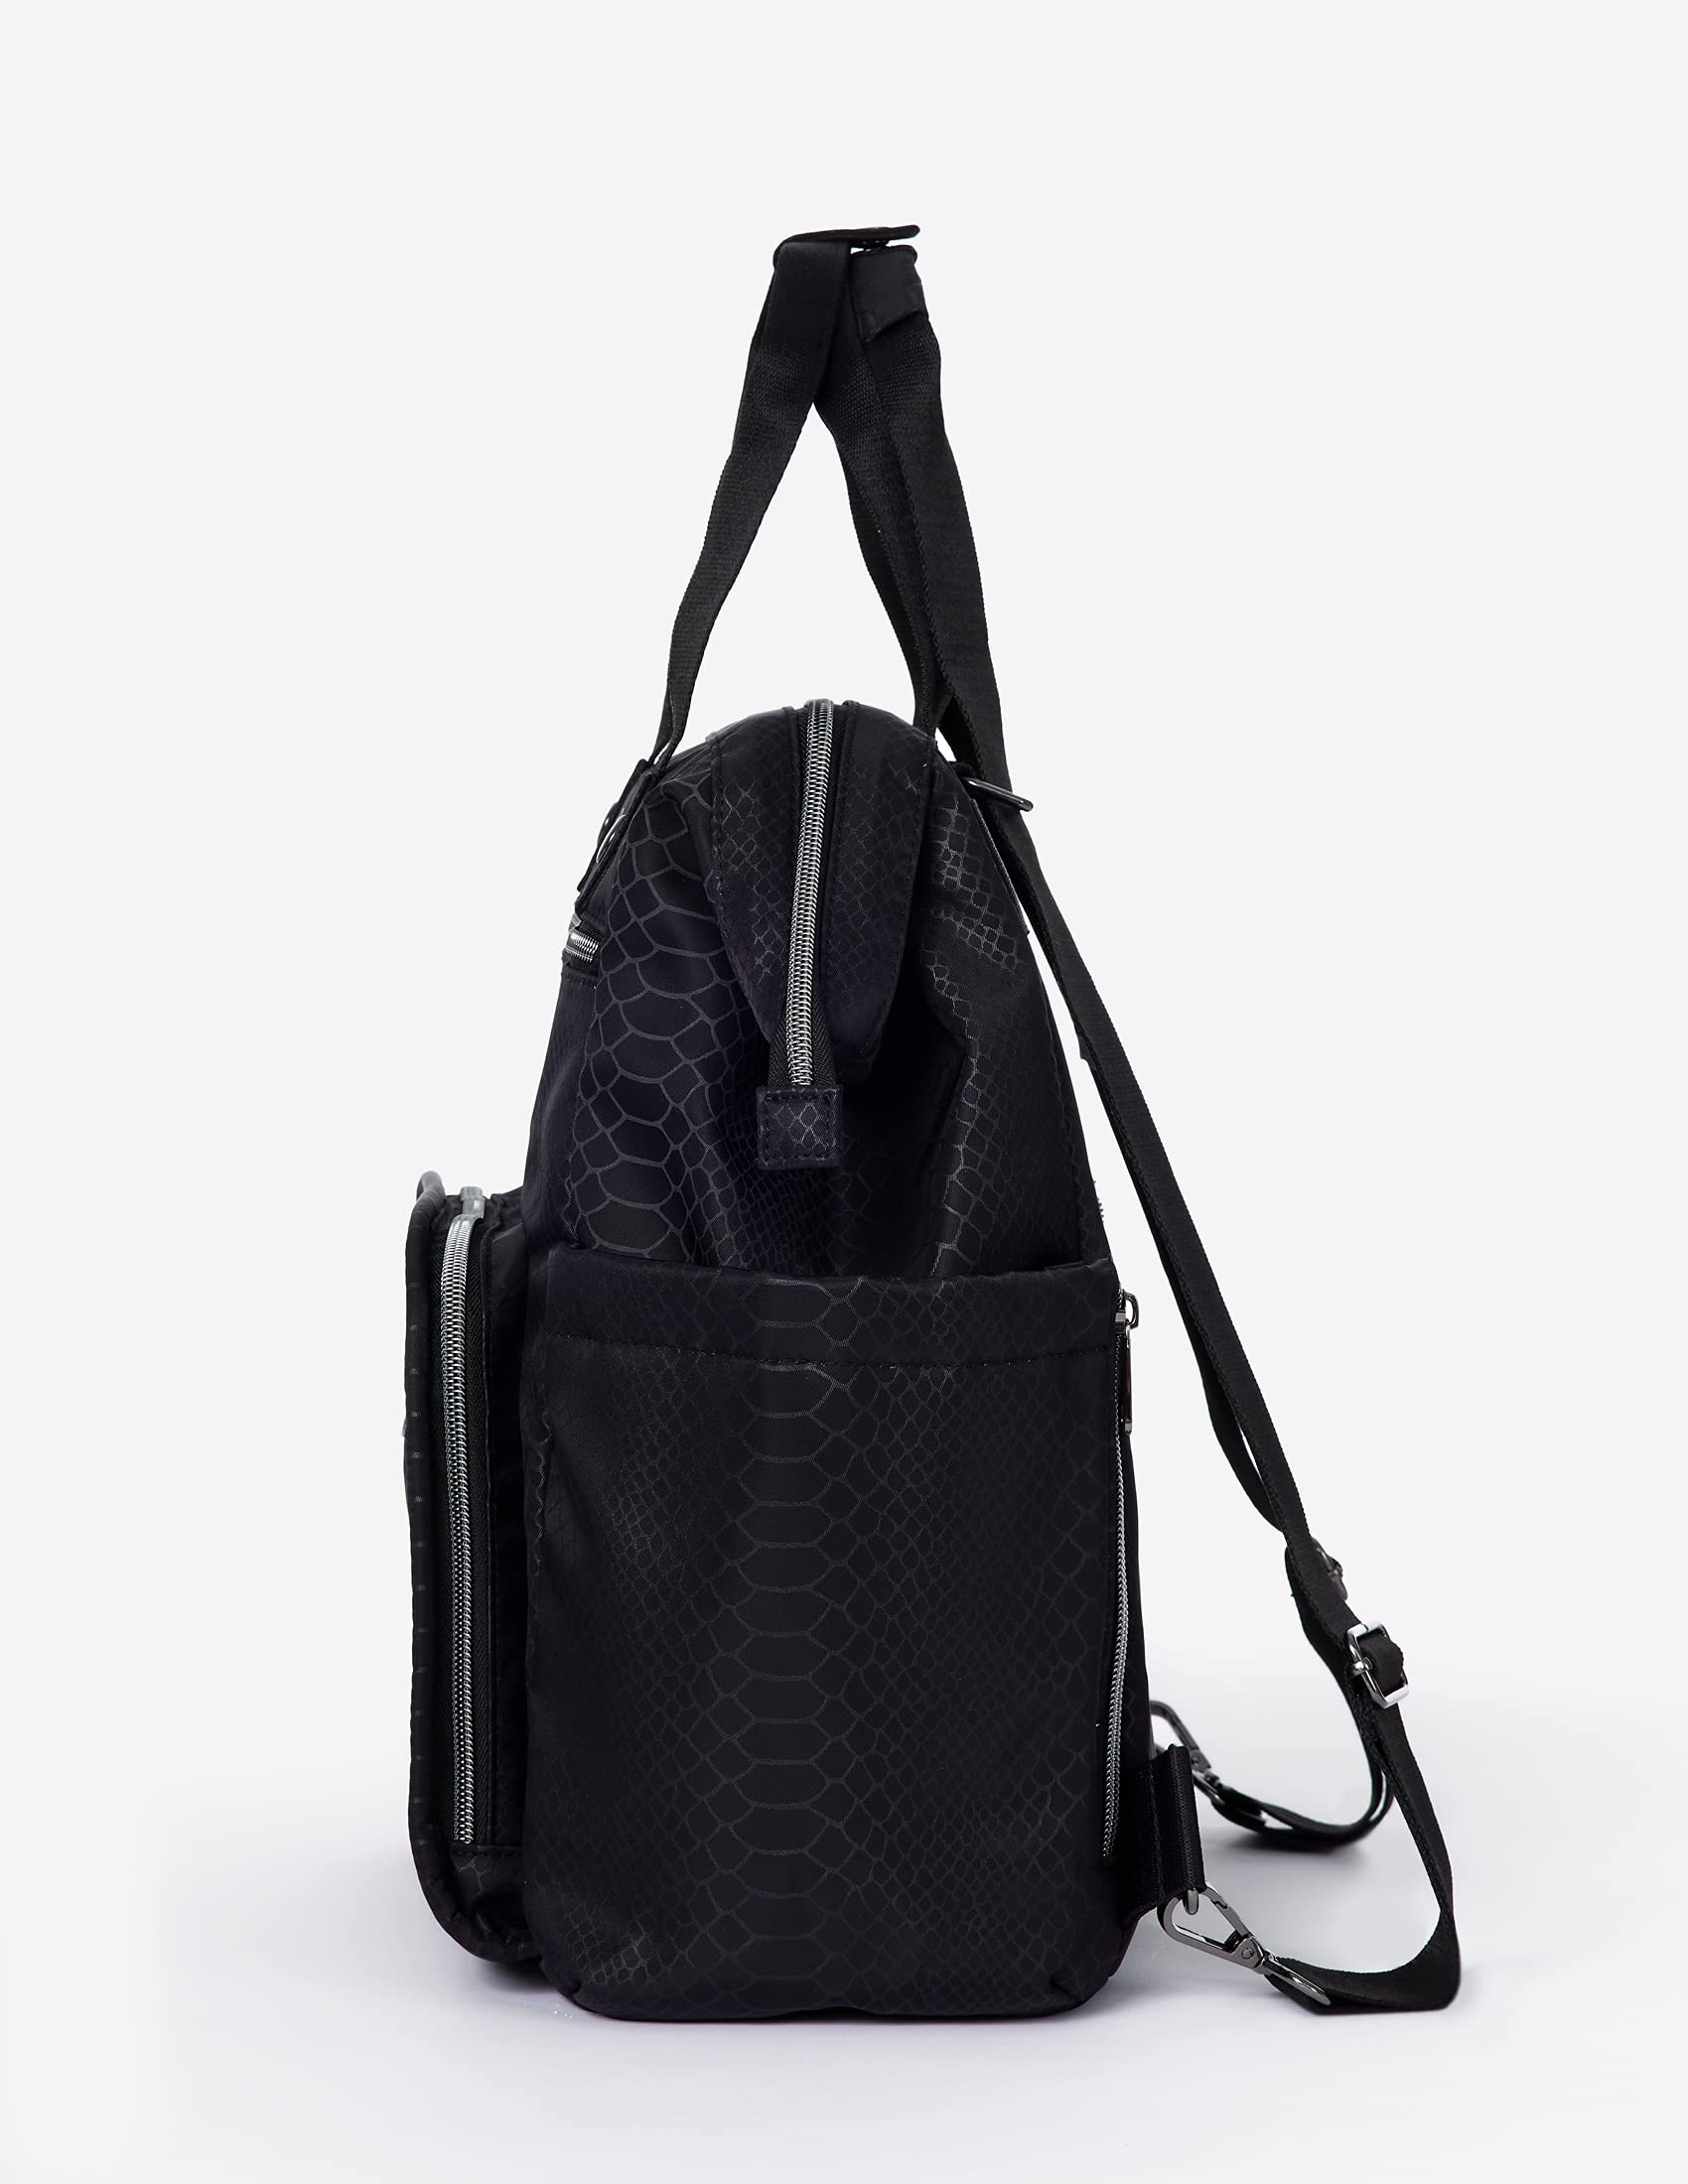 HeartSoul Women's Convertible Bella Backpack, Nurse Backpack for Work, One size, Black Pebble w/Black Straps